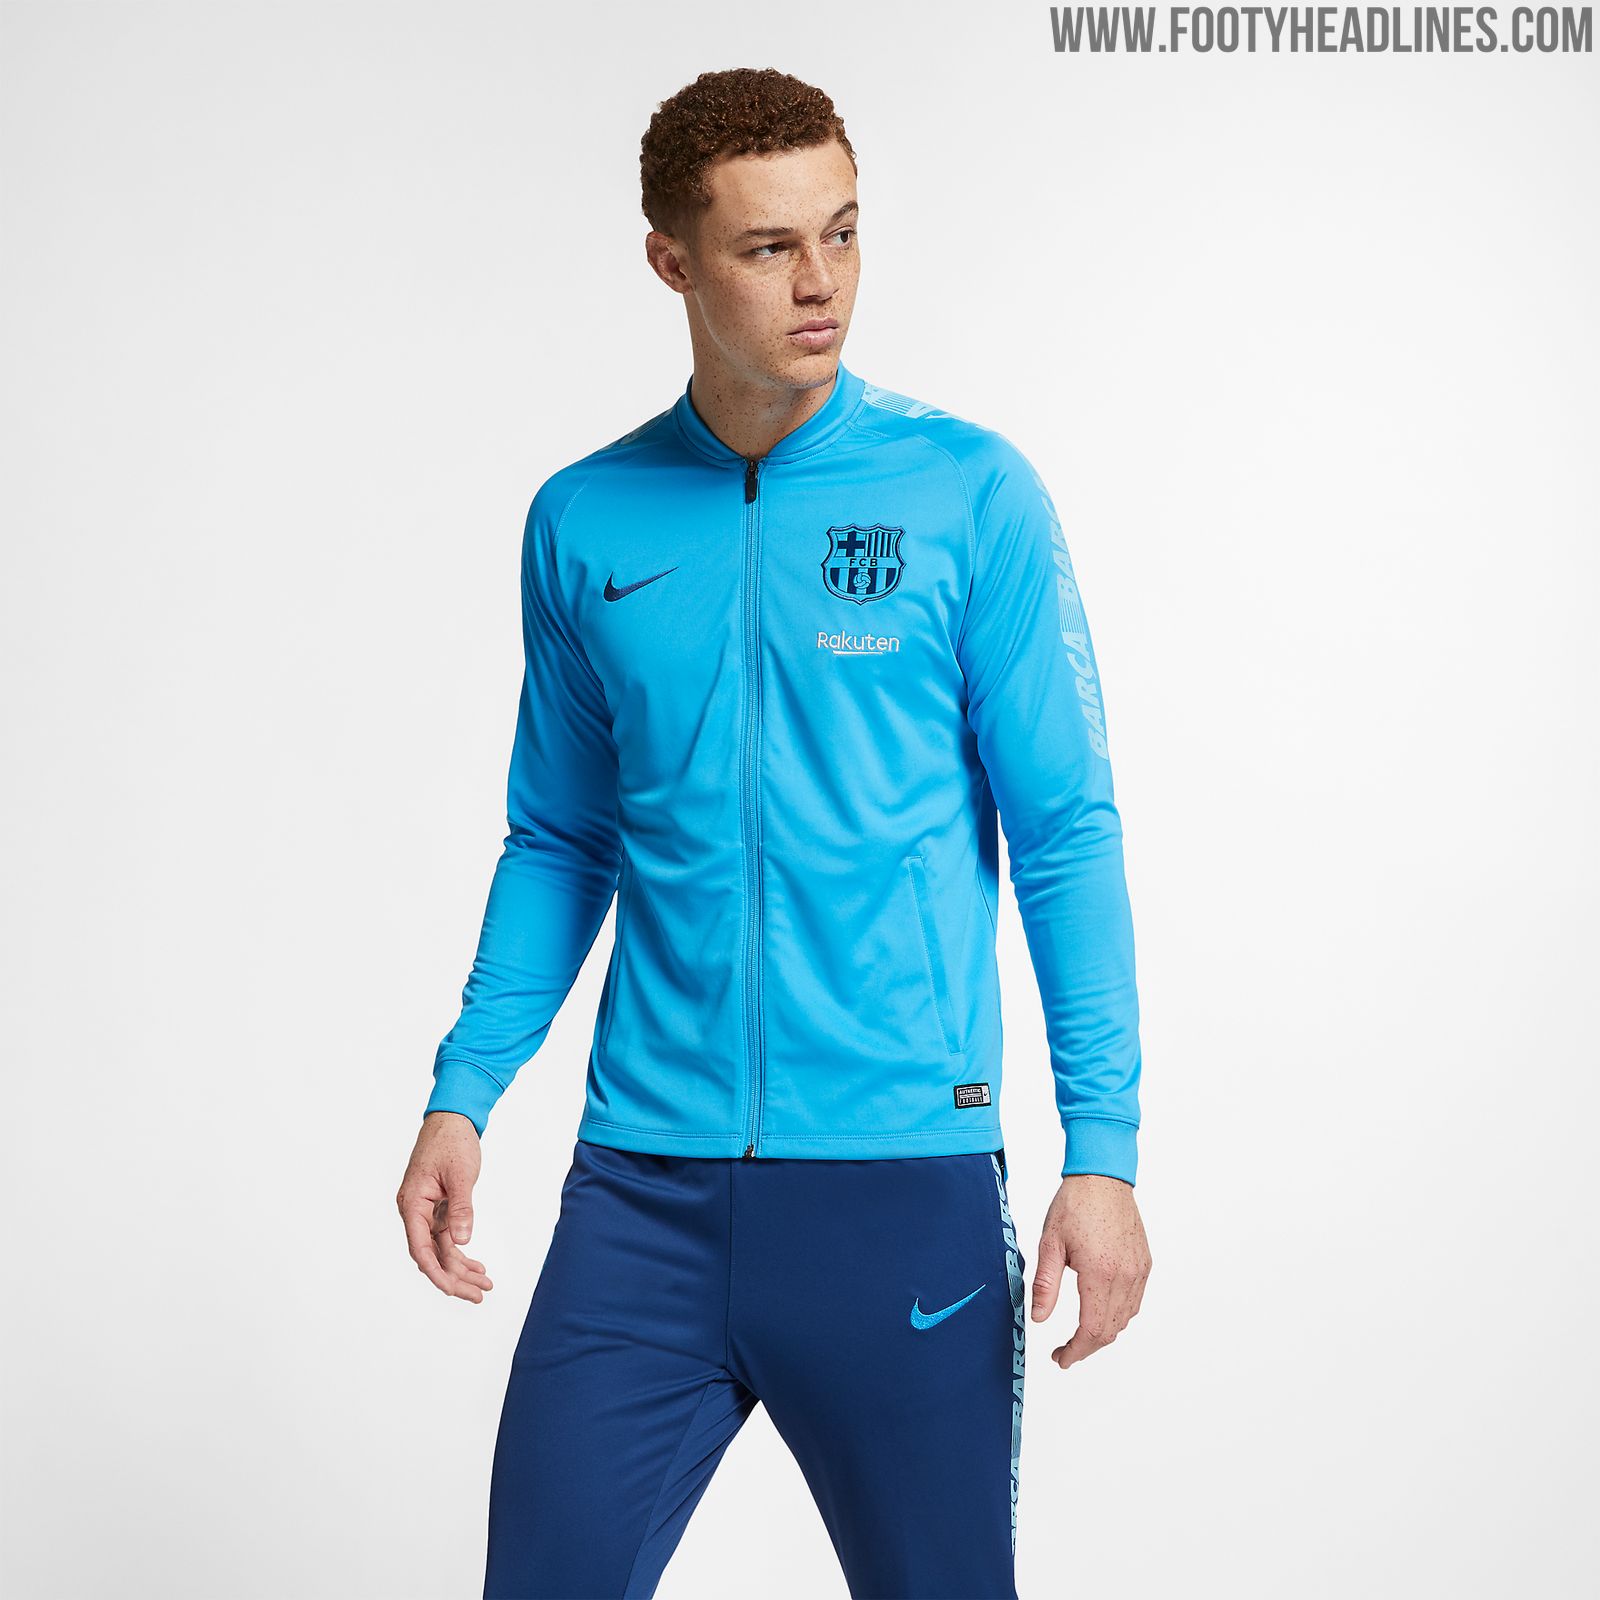 Nike Barcelona 2019 Training Kit Released - Footy Headlines